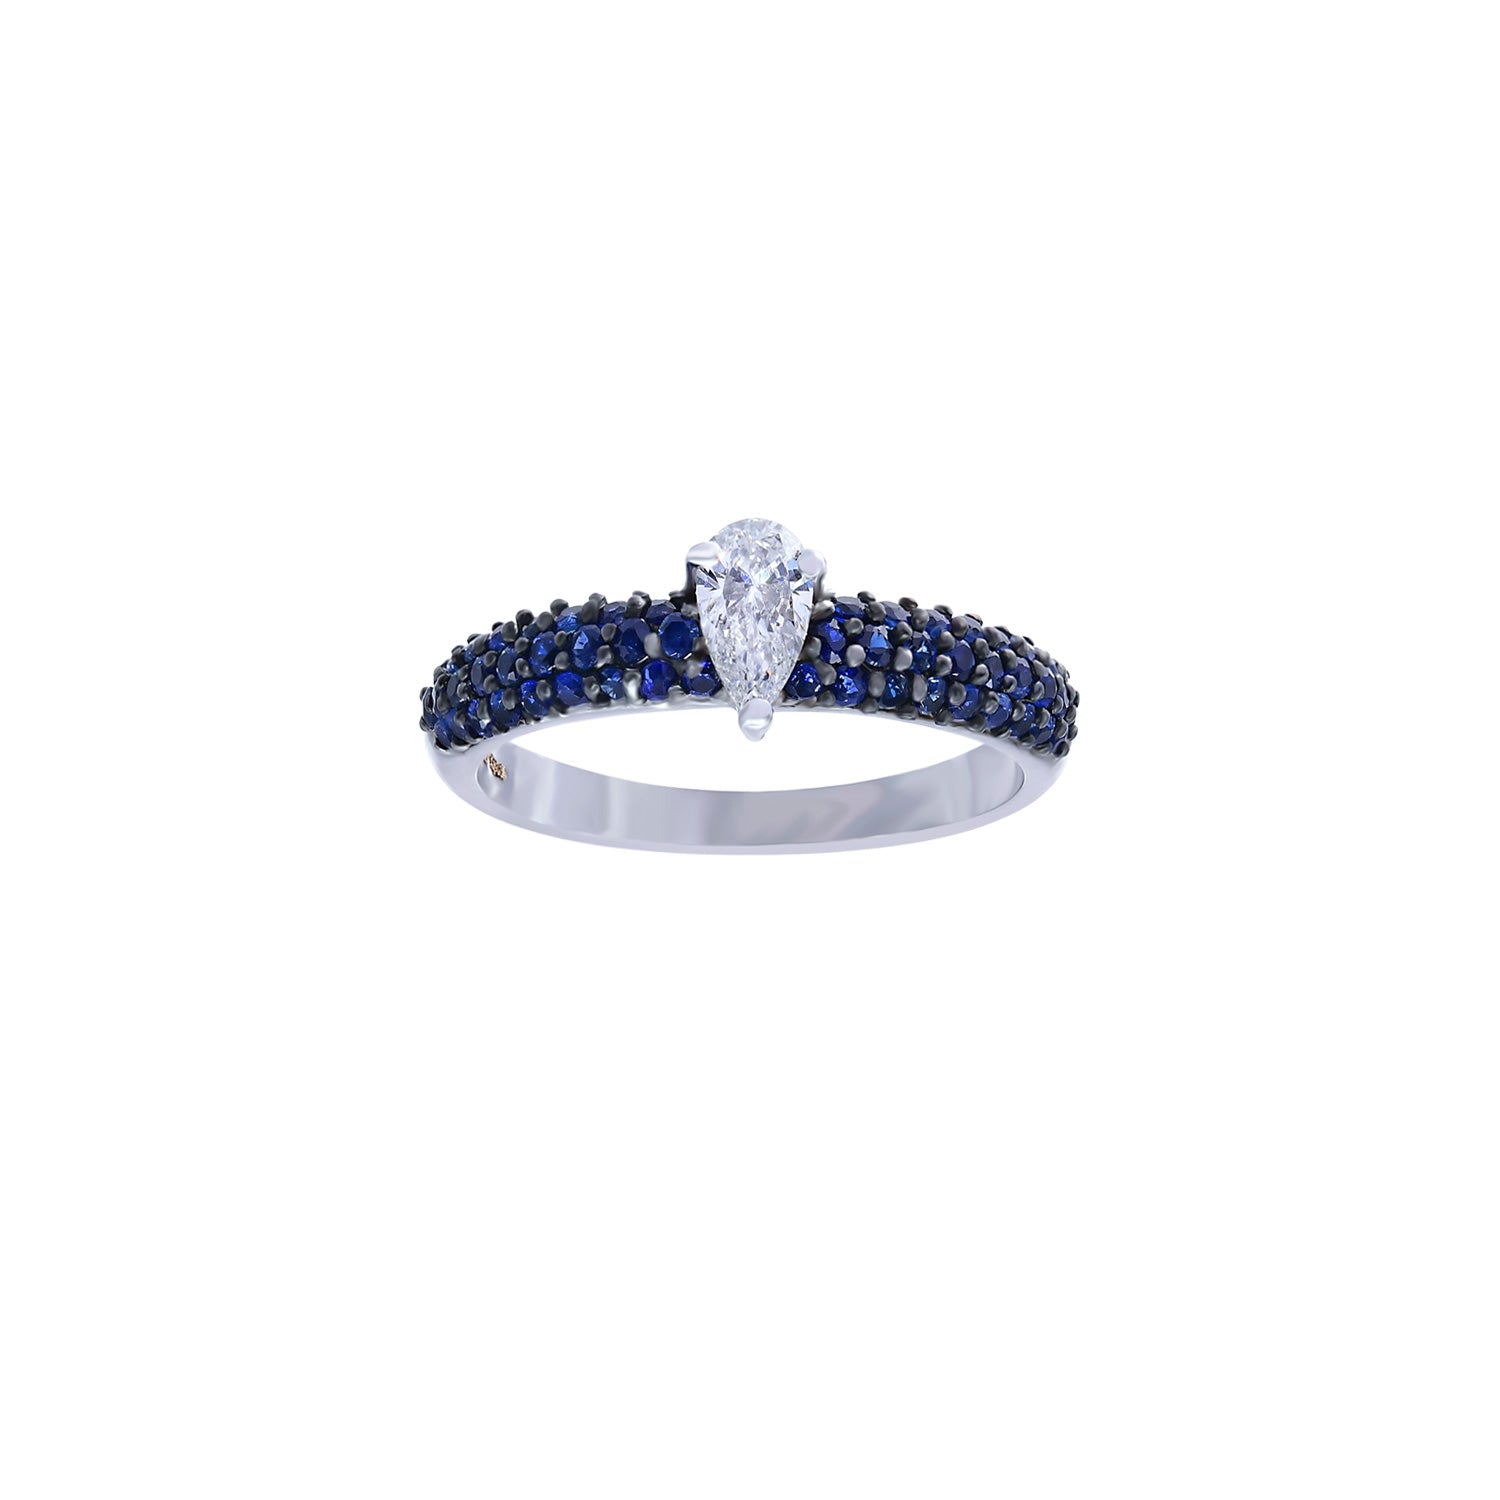 Diamond engagement ring. Pear shaped diamond ring. Diamond and sapphire ring.